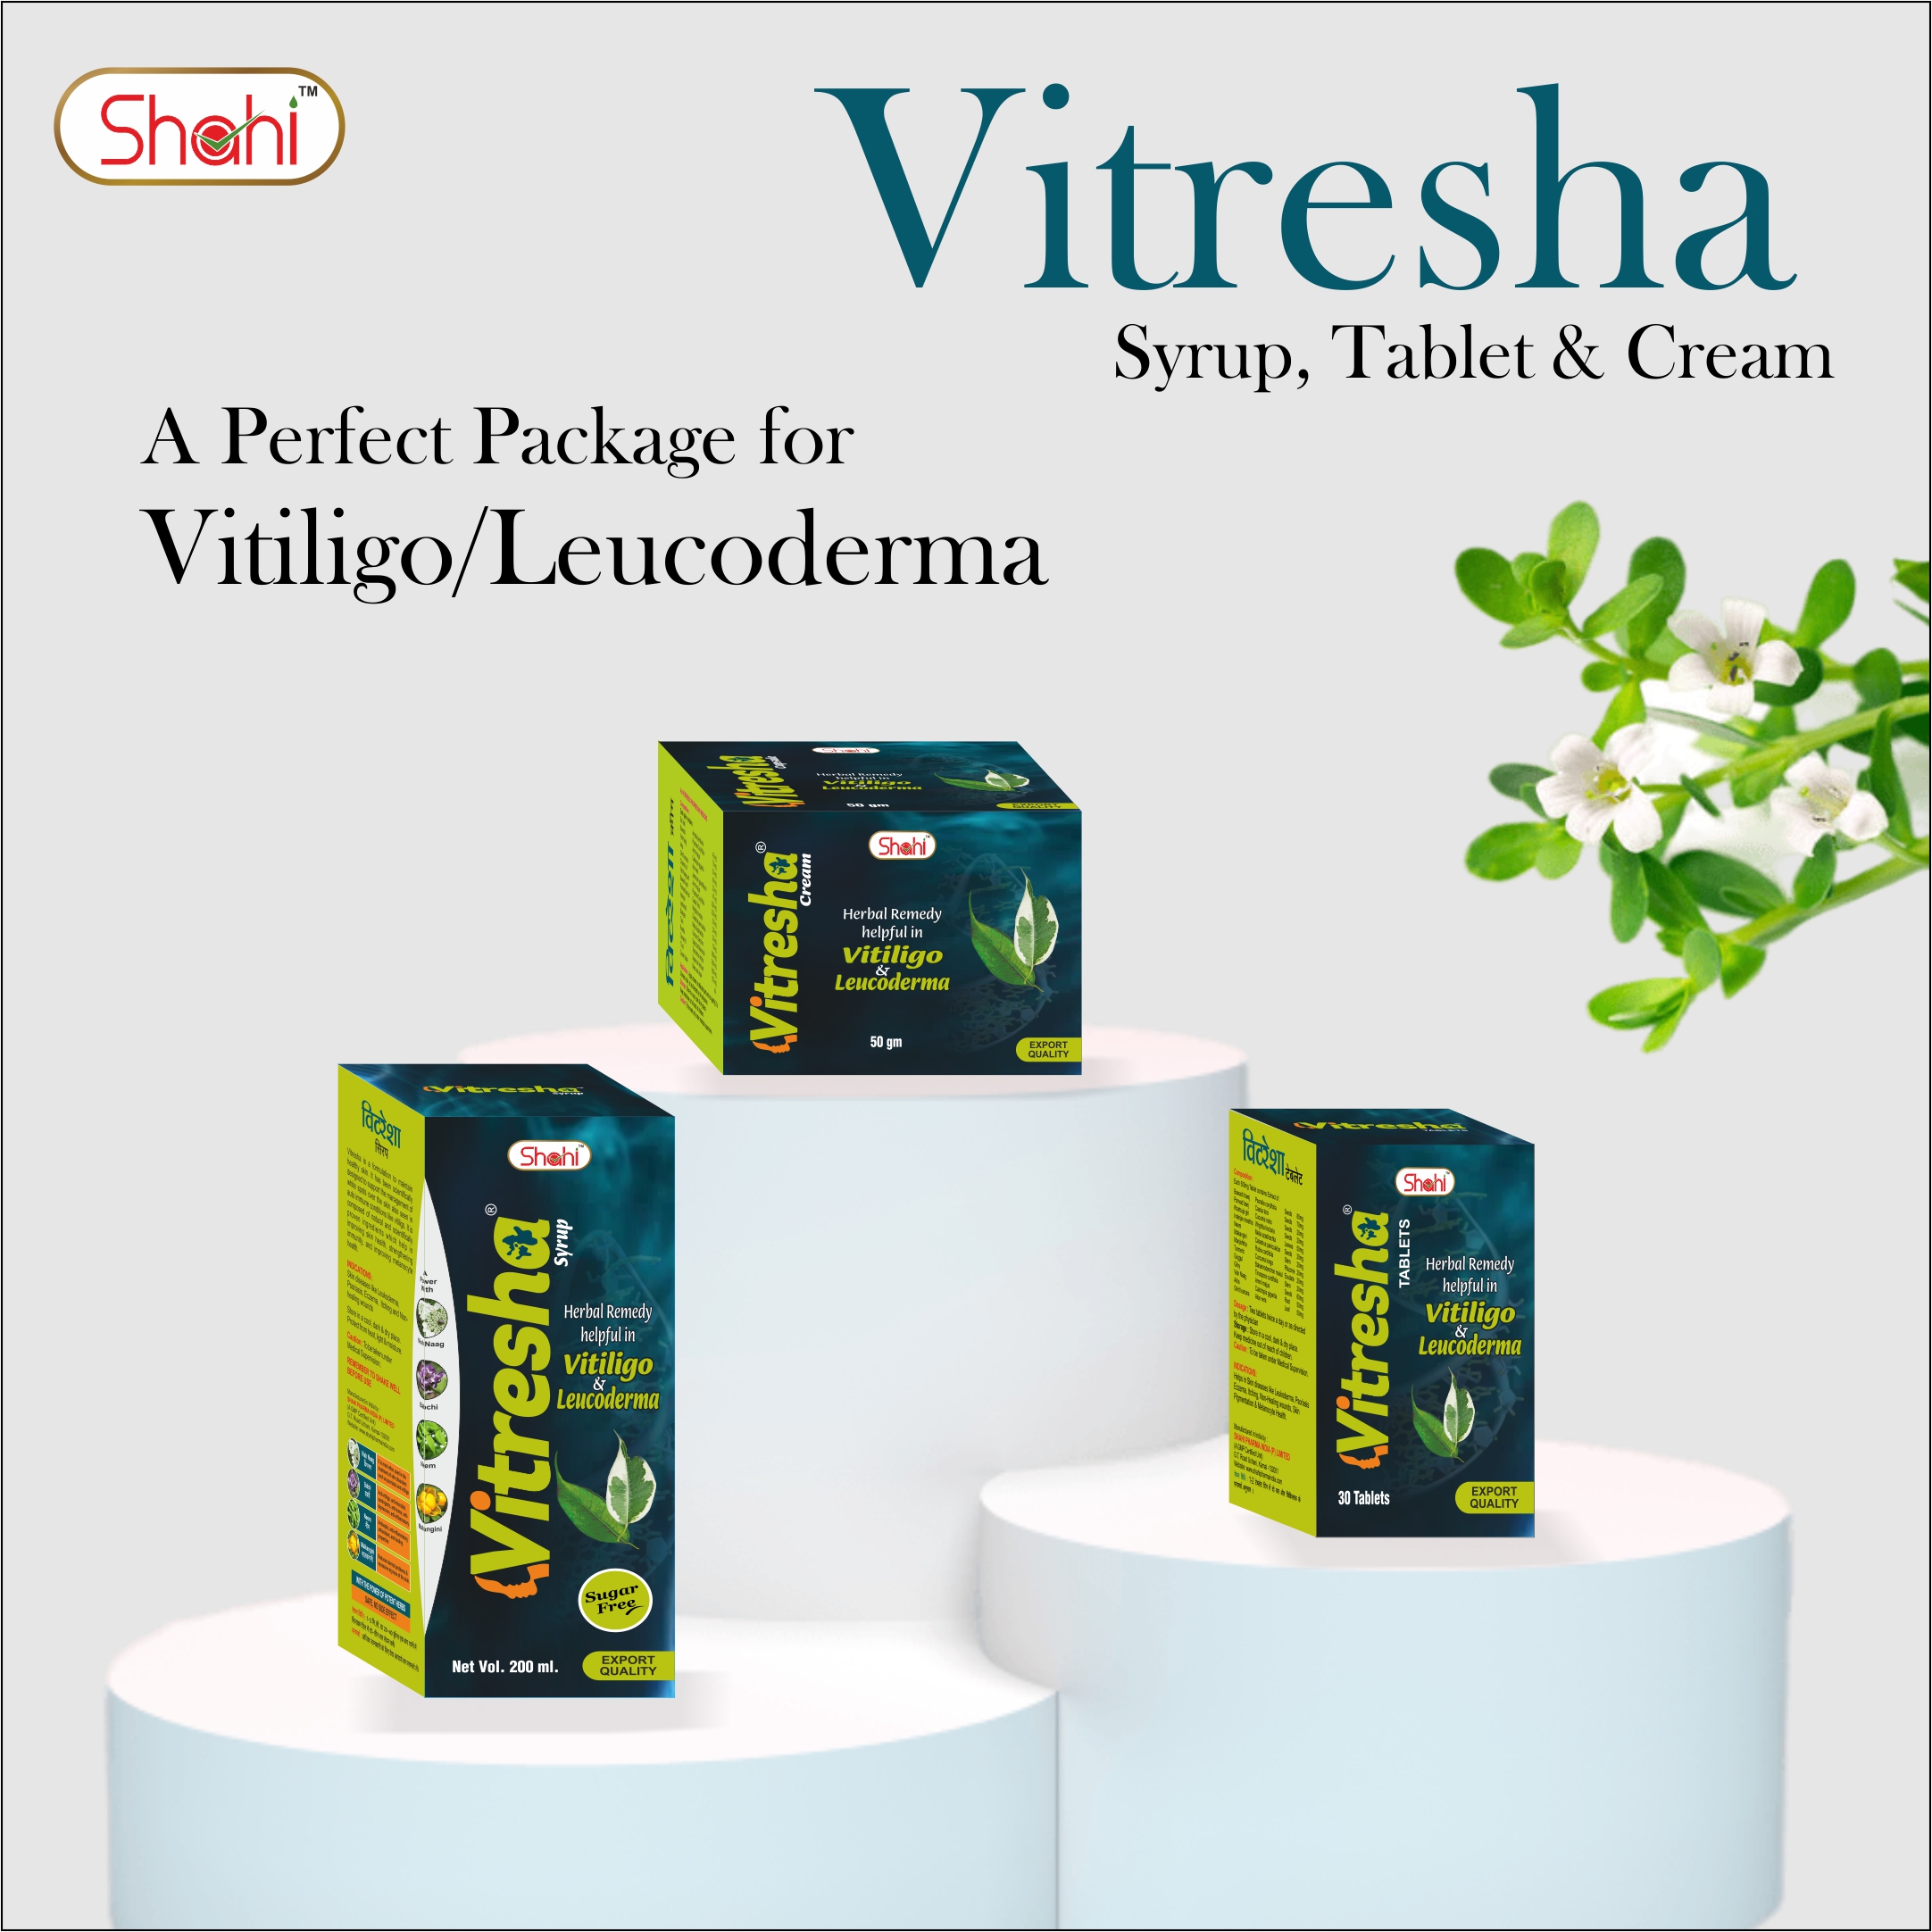 Vitresha Syrup, Tablet & Cream